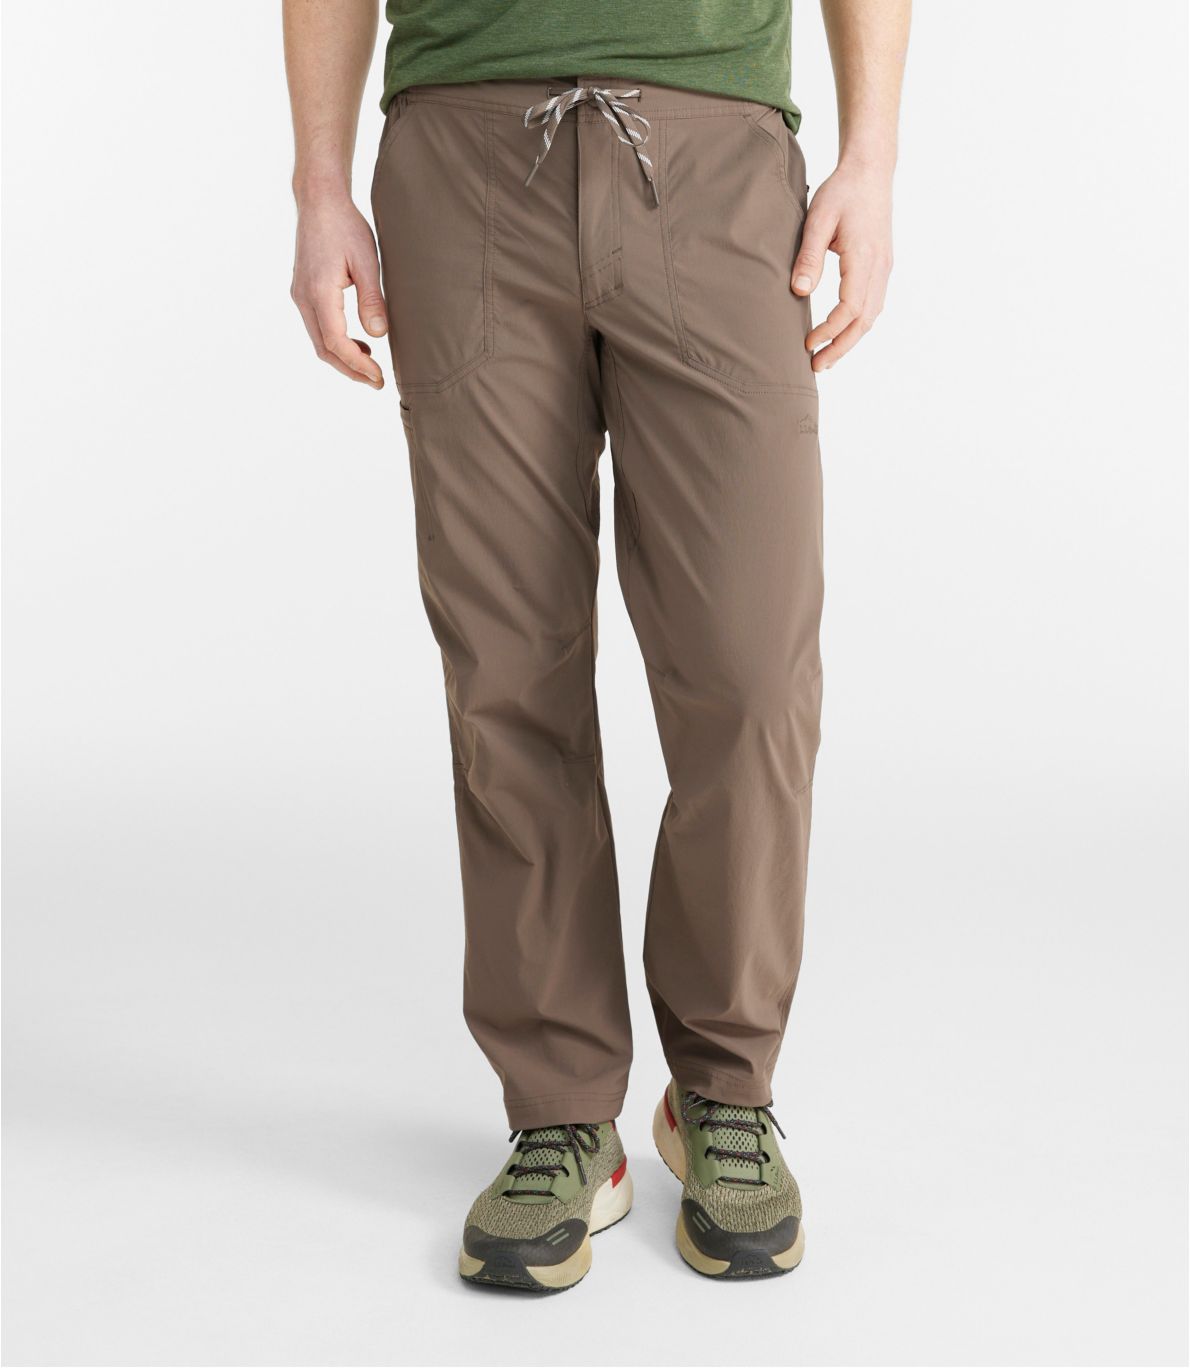 Men's Water-Resistant Pull-On Cresta Hiking Pants, Standard Fit